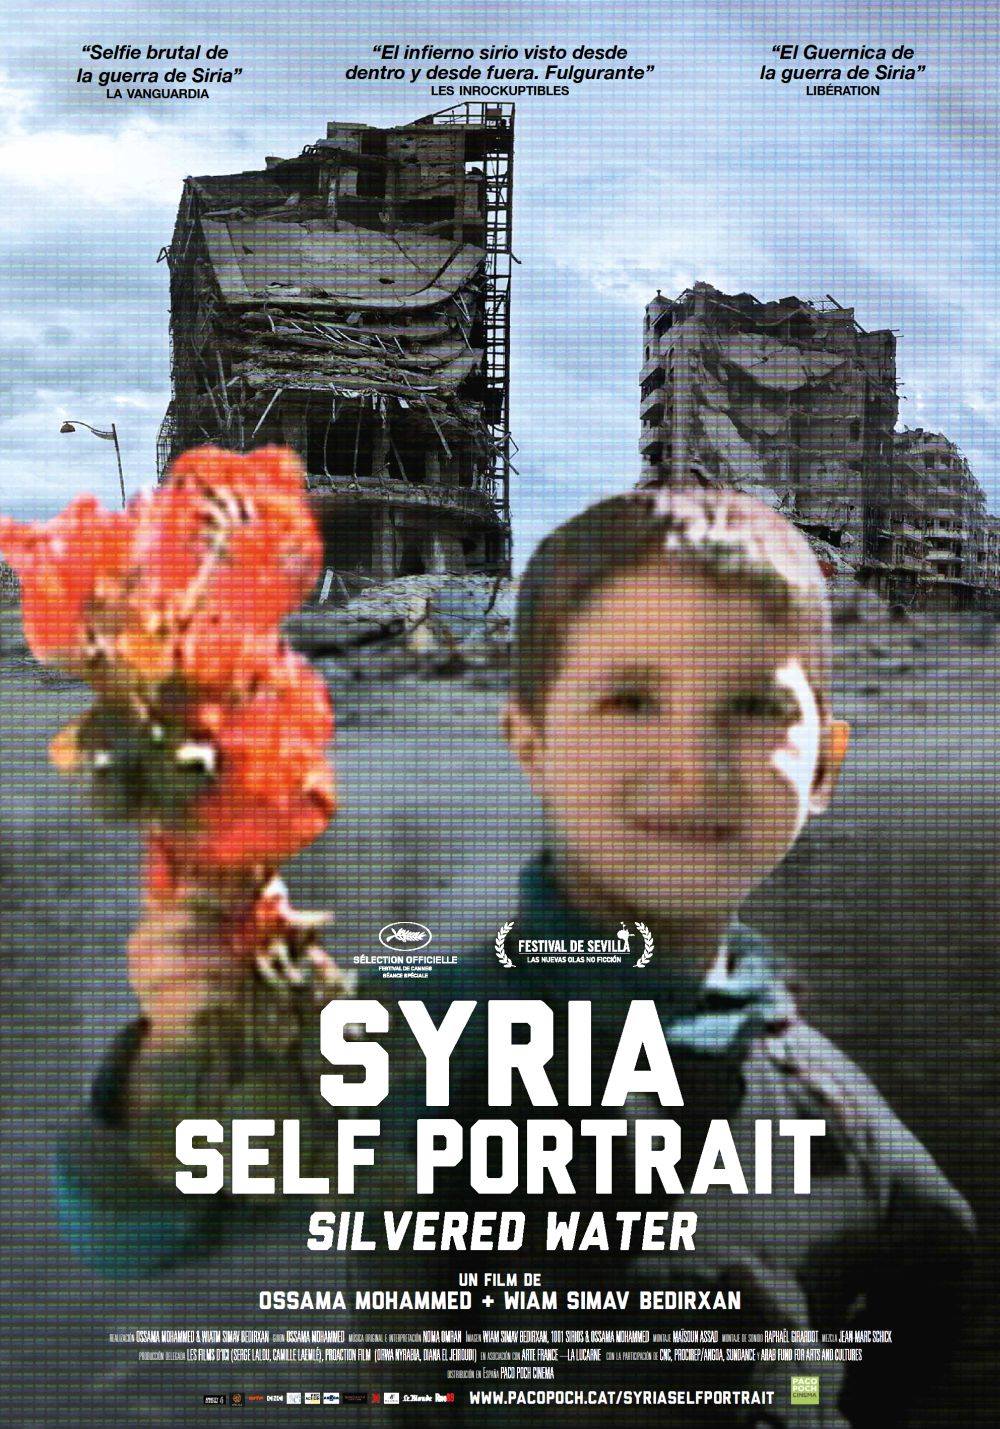 SyriaSelfPortraitSilveredWater